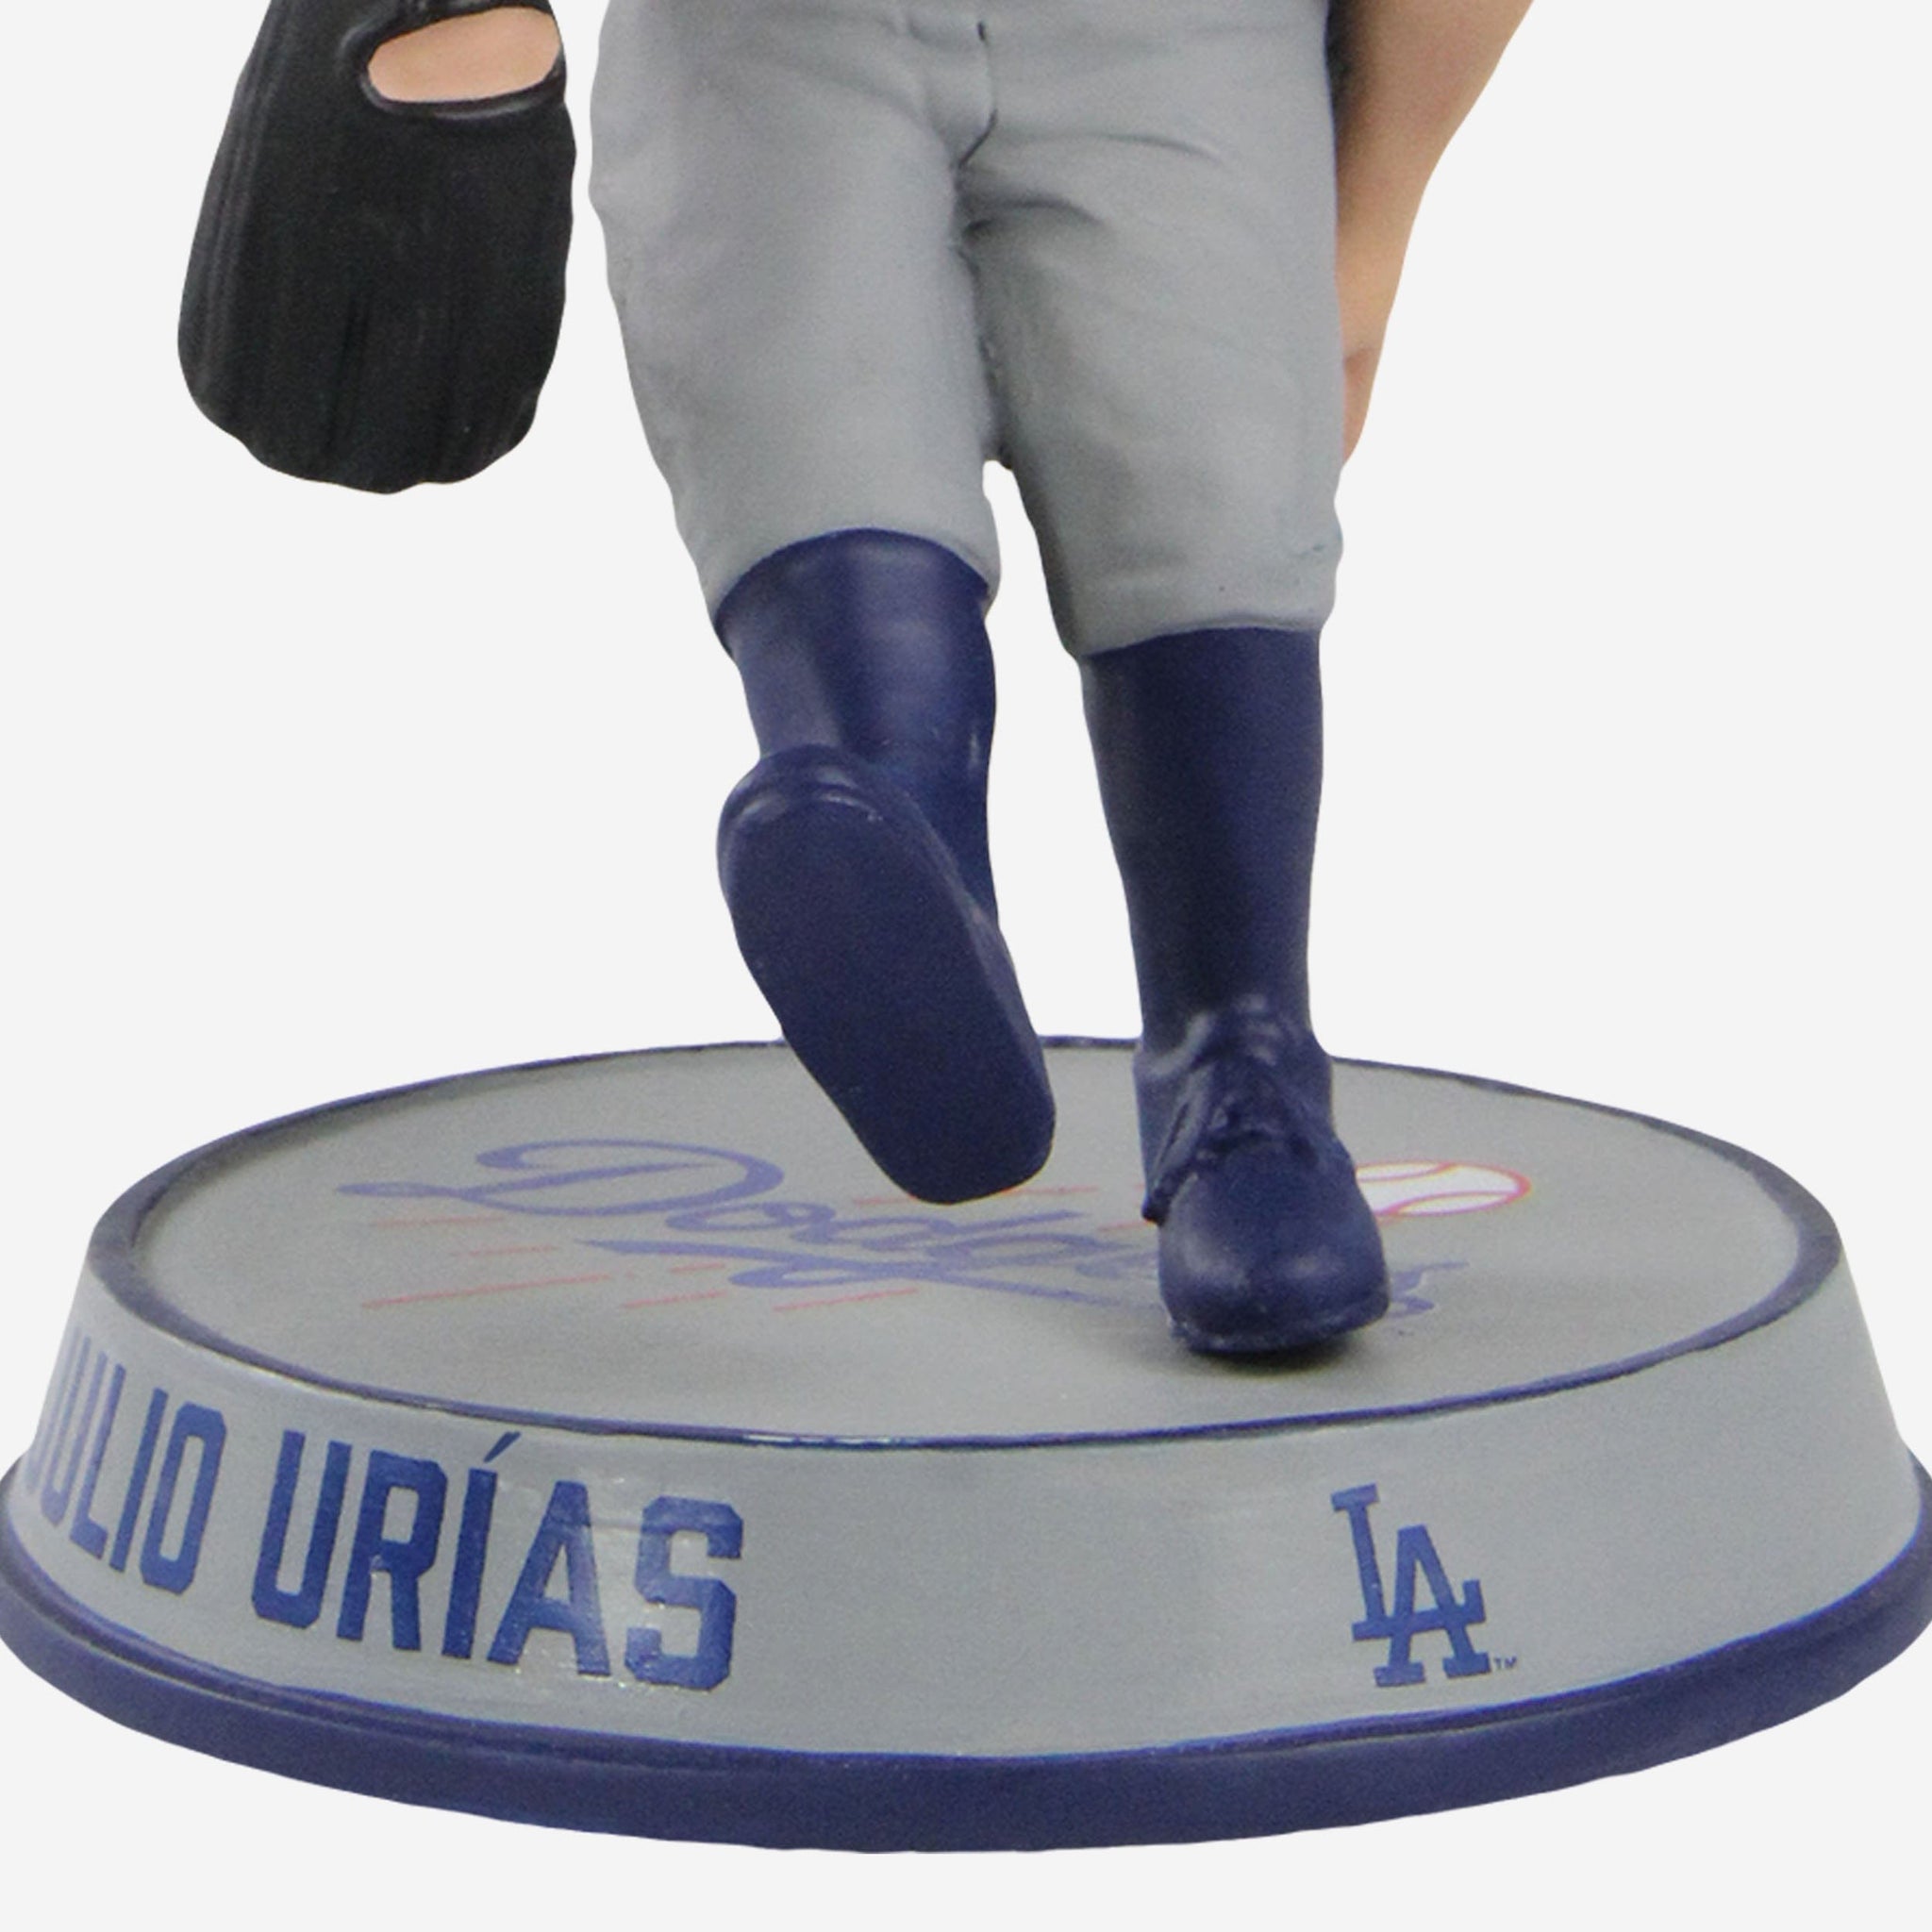 Julio Urias Jersey NEW Mens Large Blue City Connect Los Angeles Dodgers